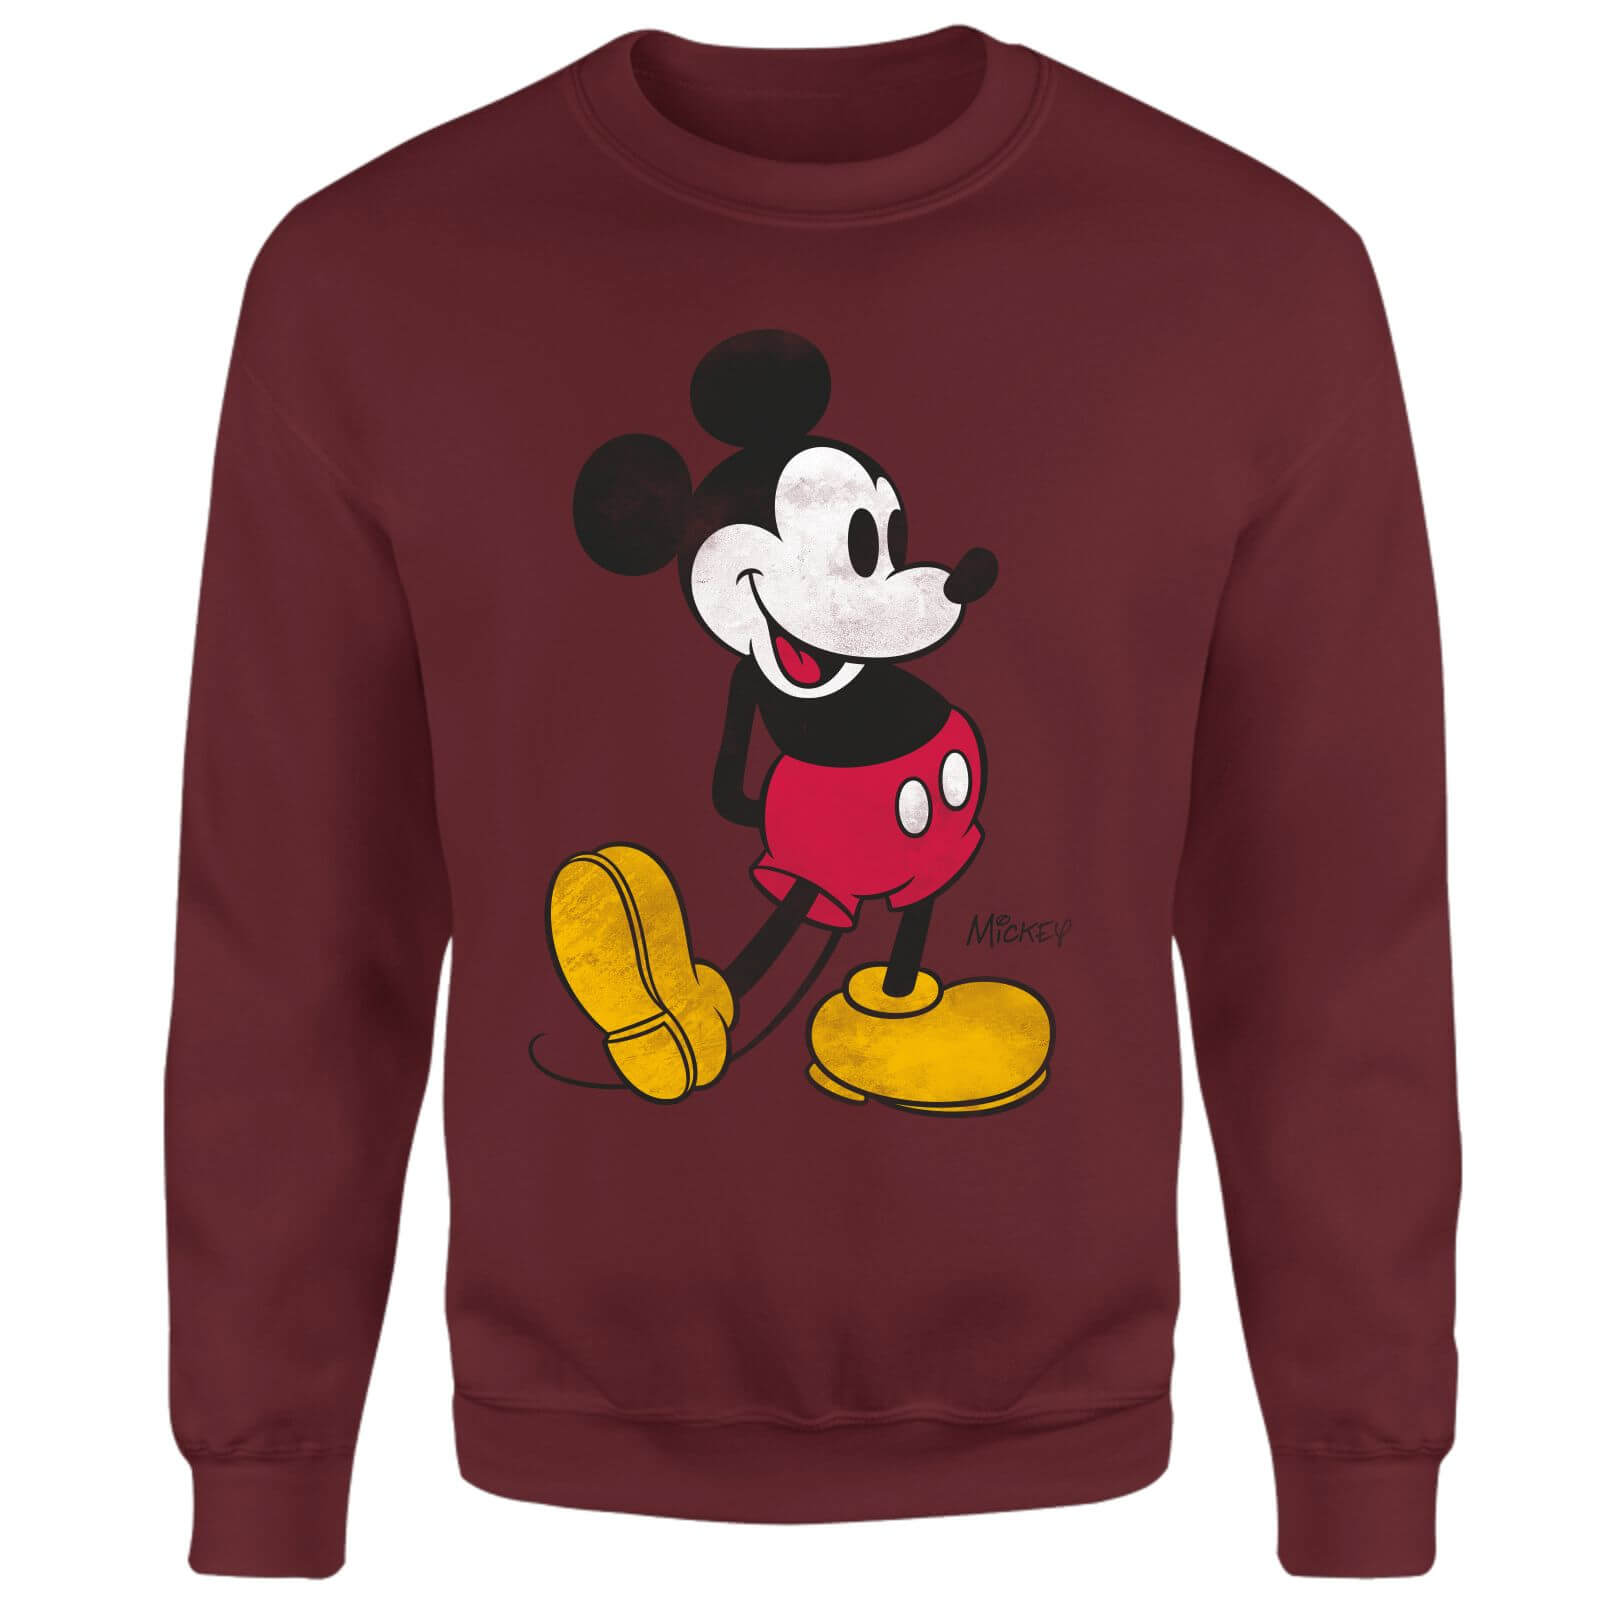 Mickey Mouse Classic Kick Sweatshirt - Burgundy - M - Burgundy